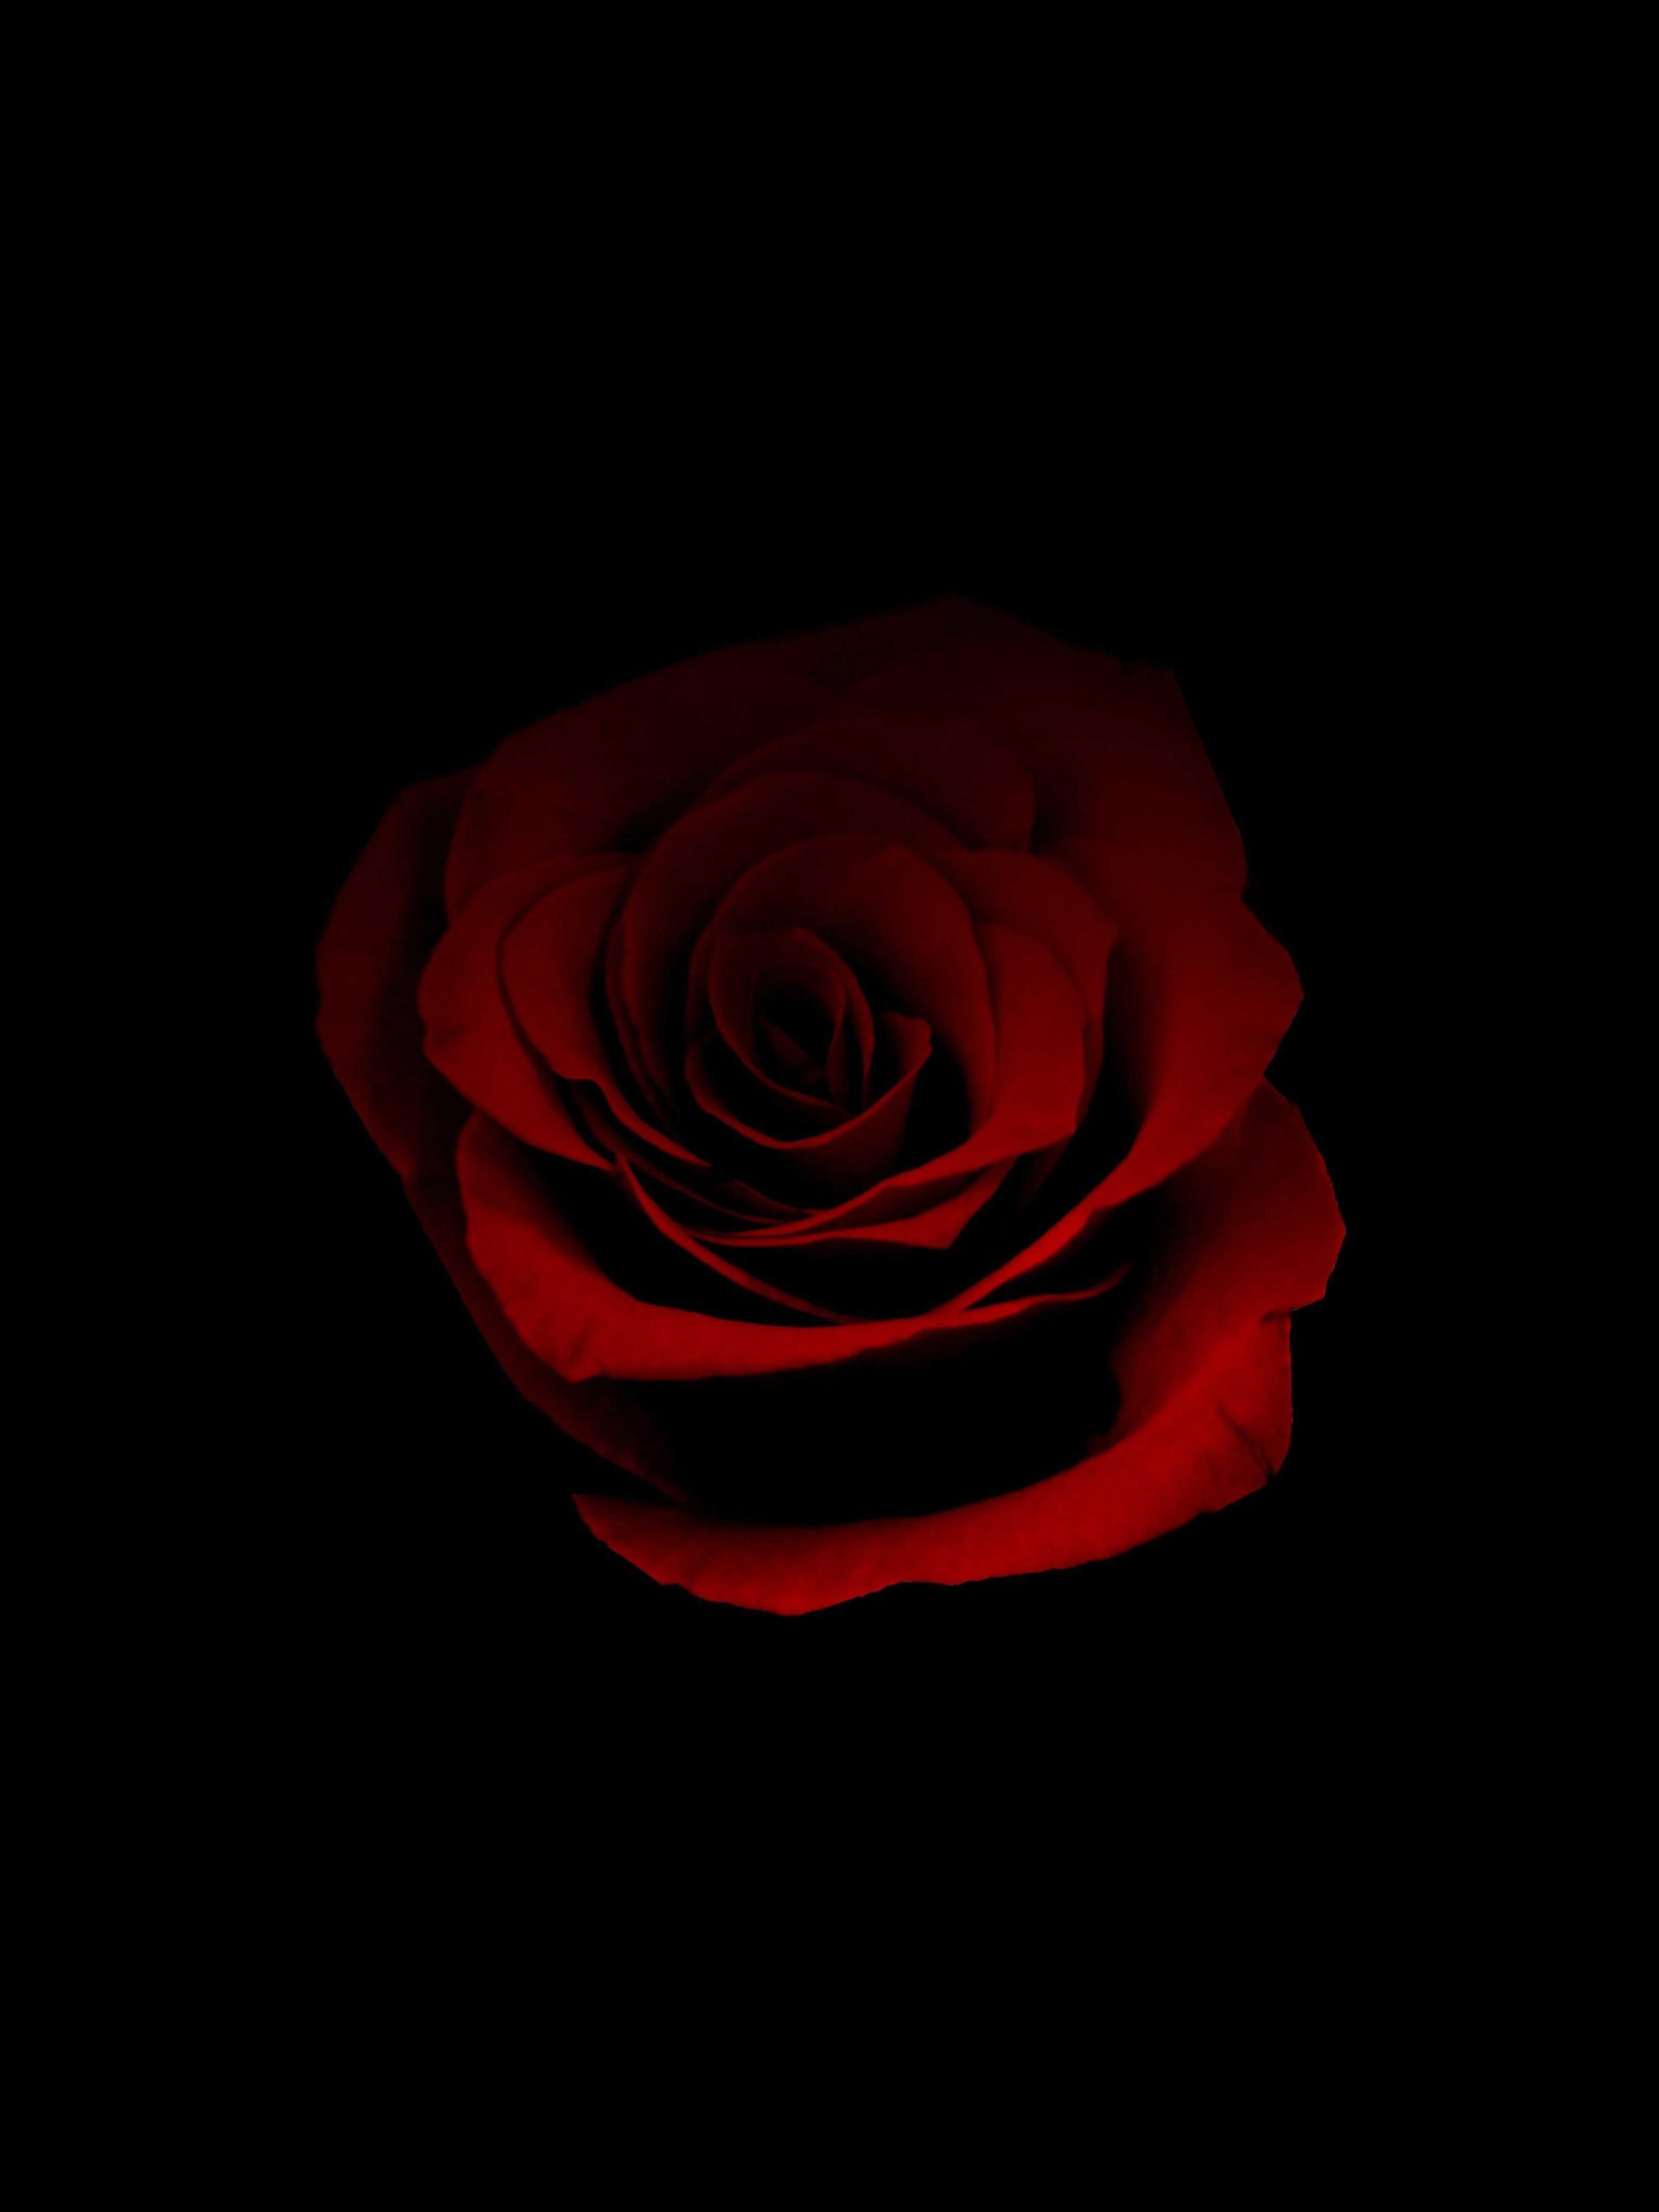 Rose Flower DP